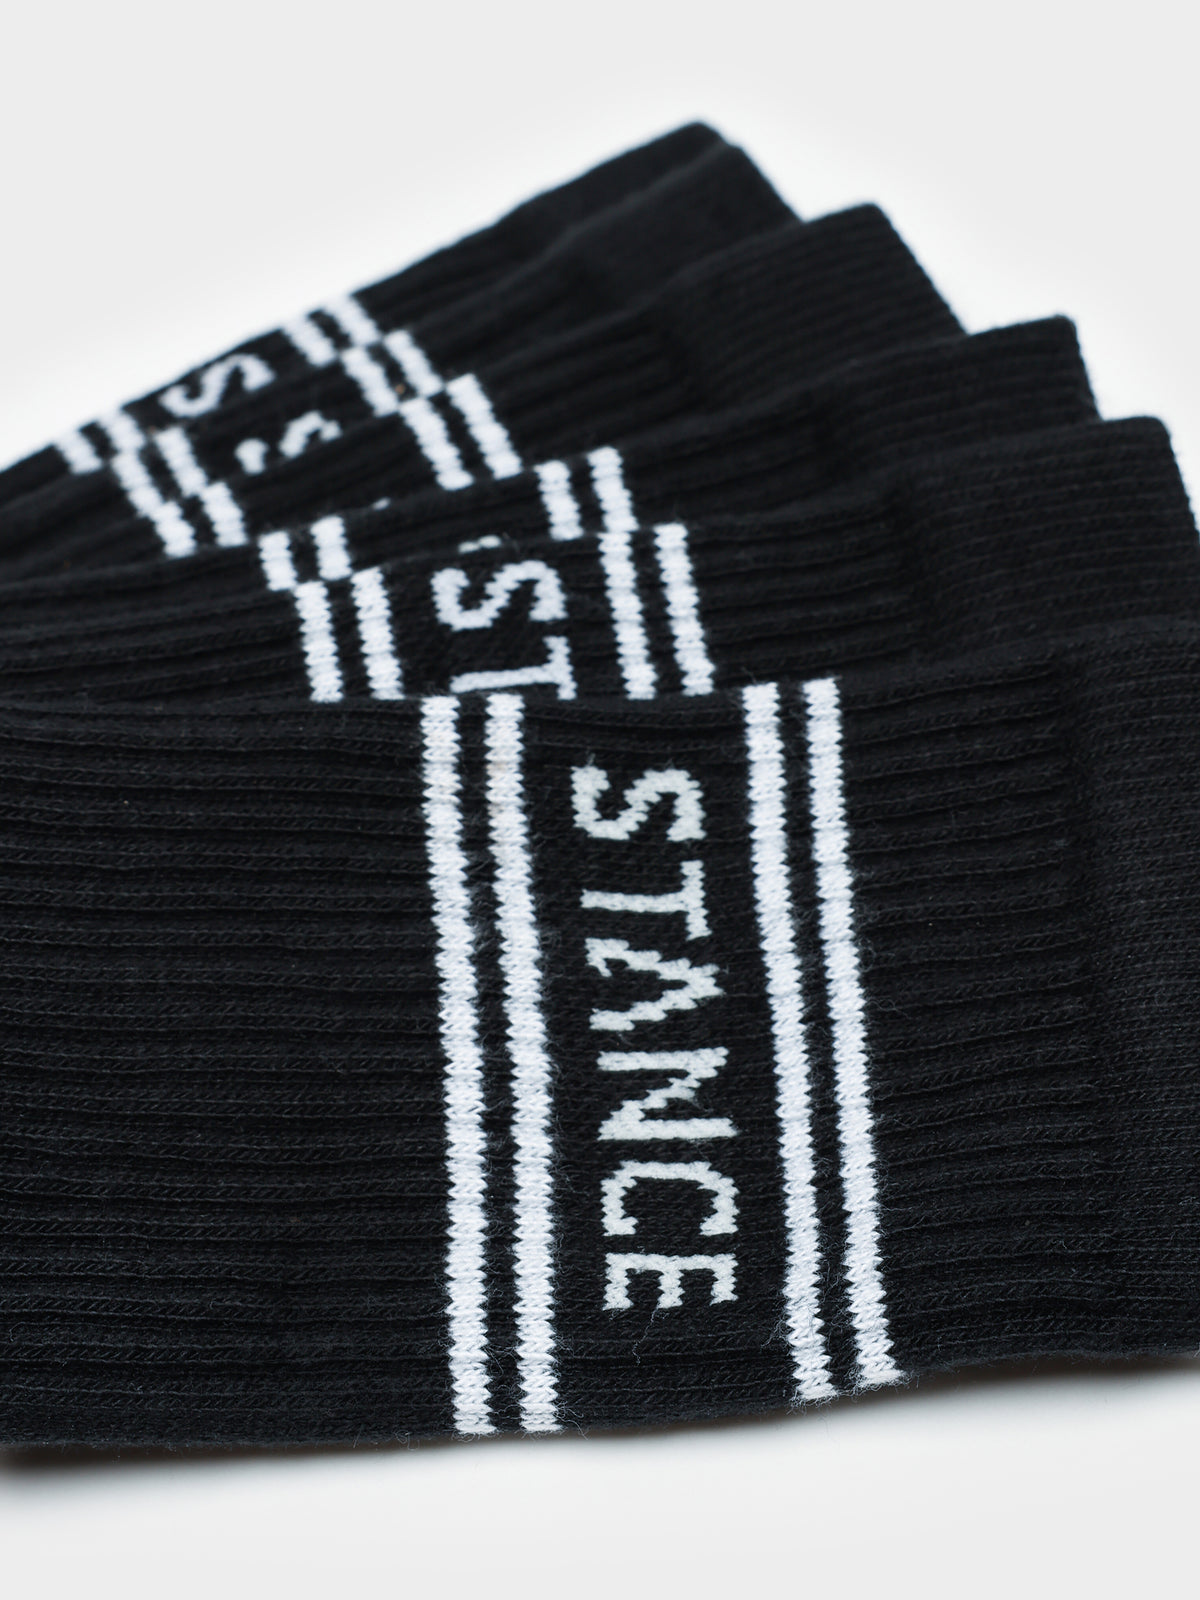 3 Pairs of Basic Crew Socks in Black